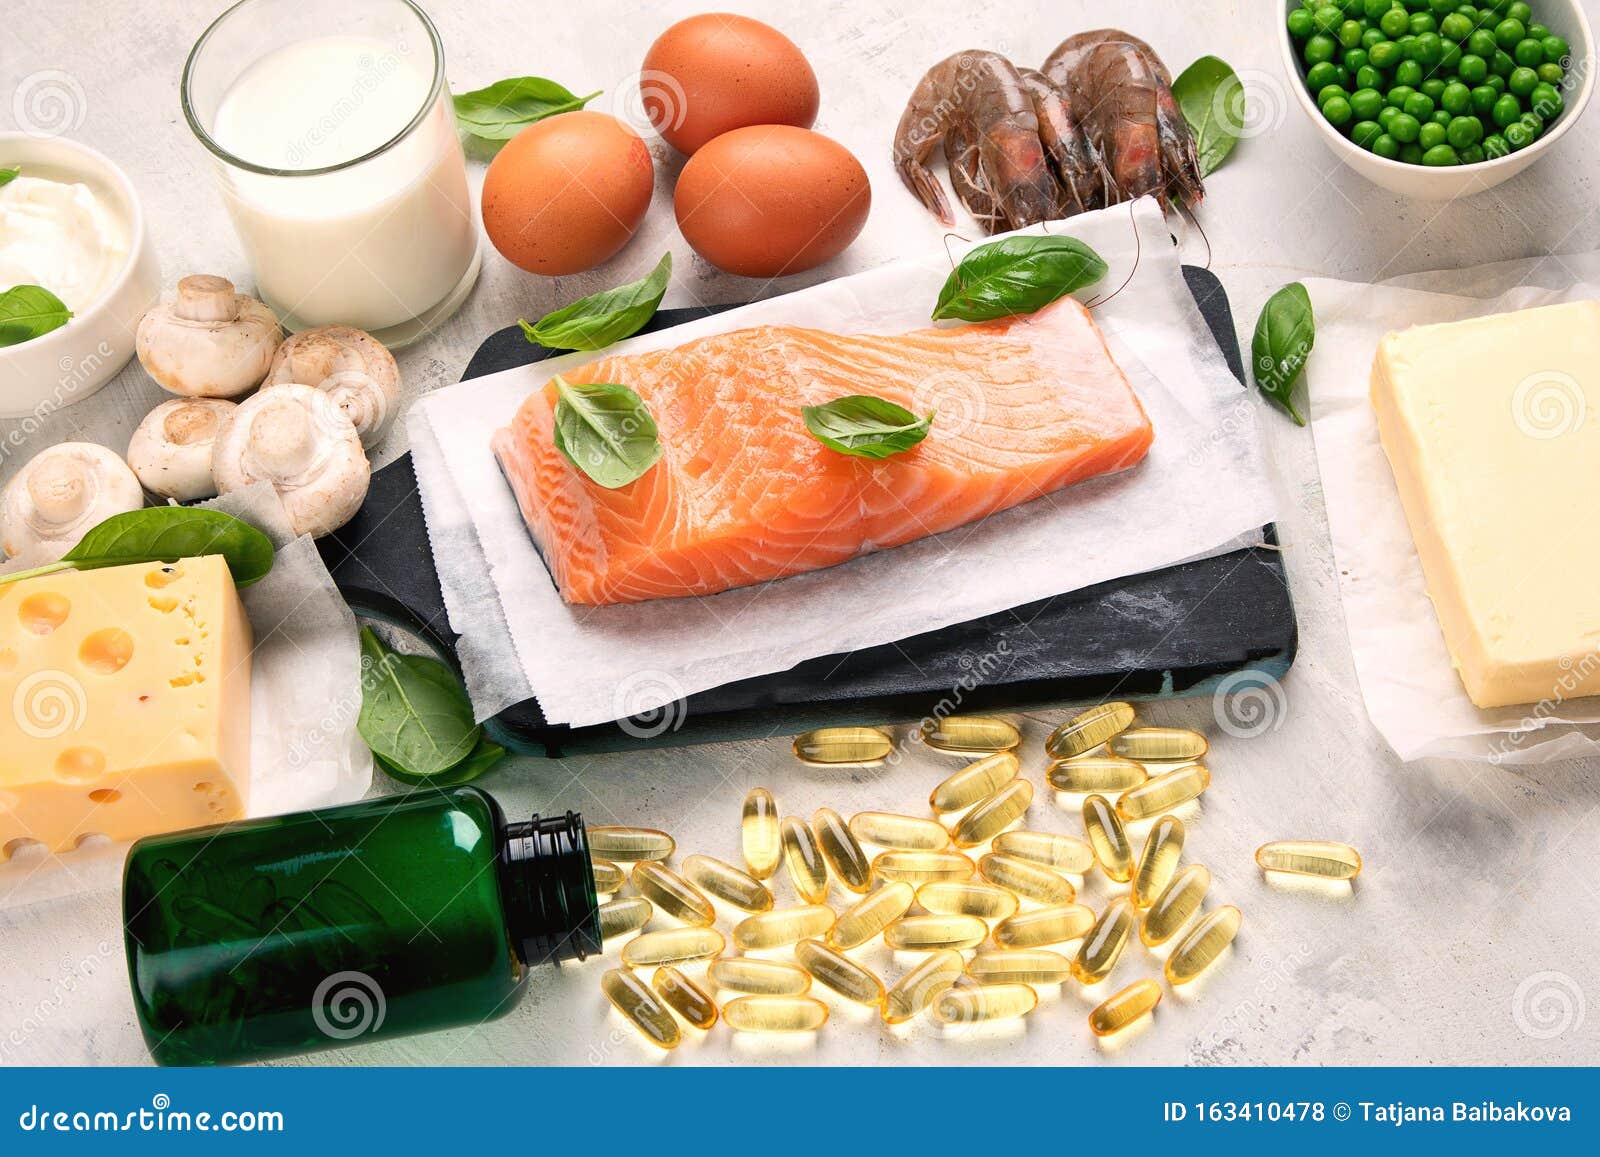 vitamin d foods and capsulas